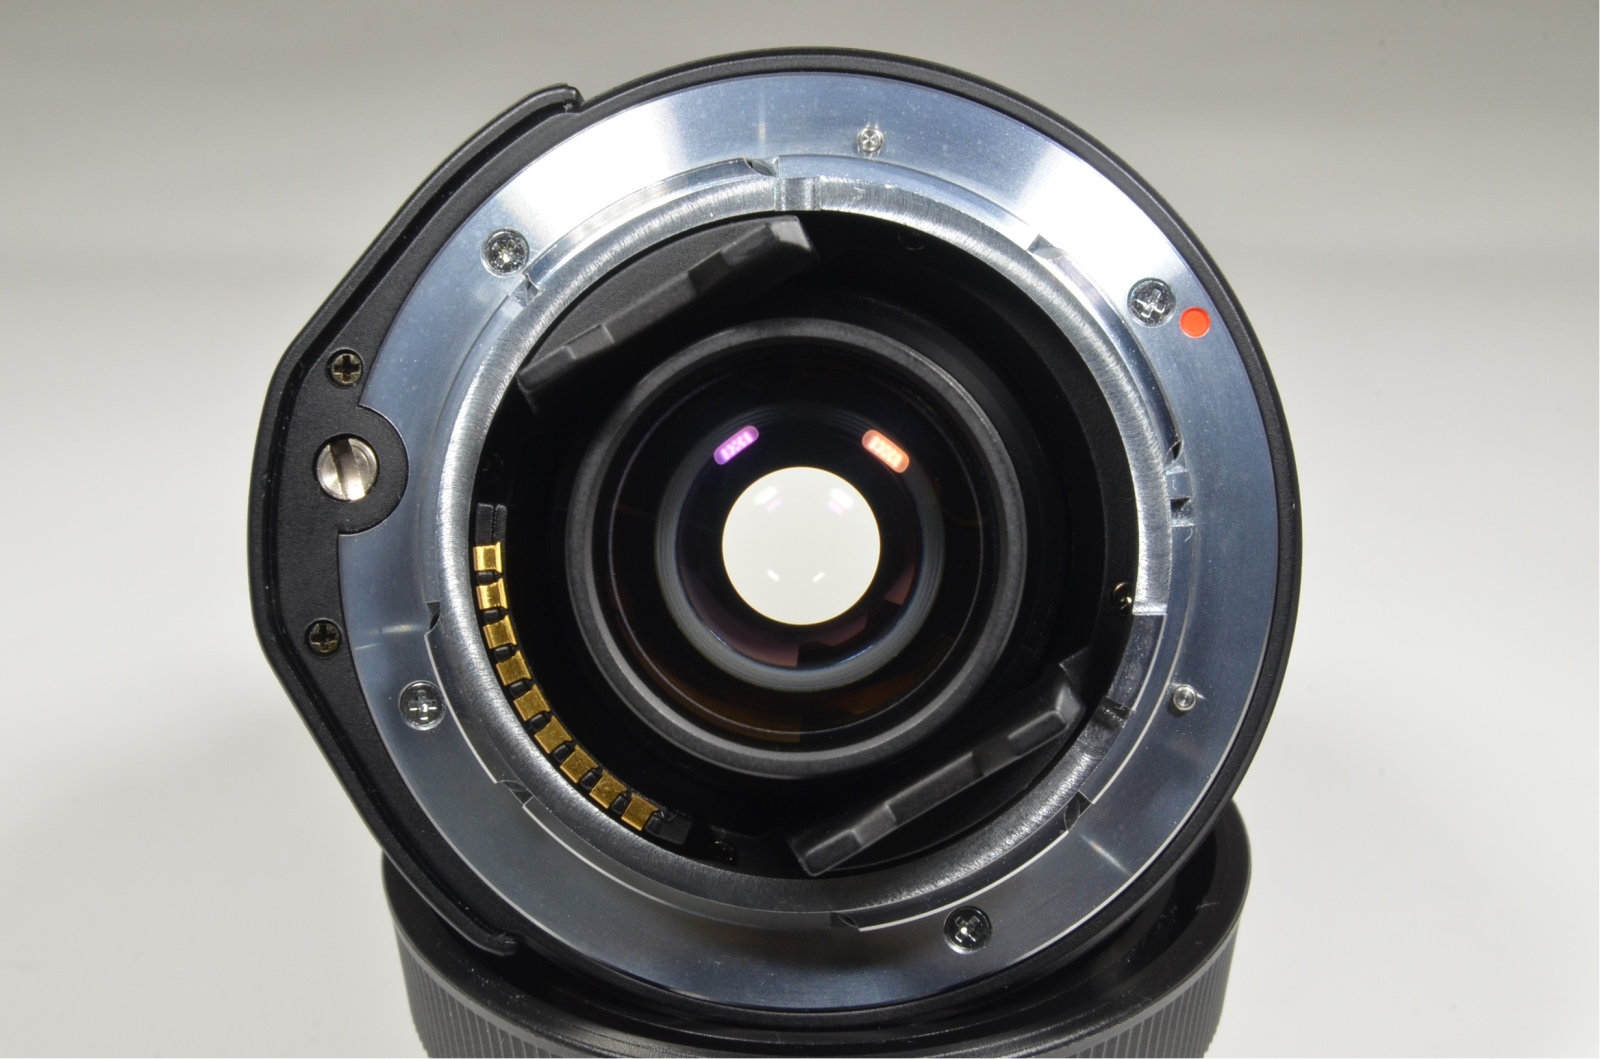 contax g2 camera / planar 45mm f2 / biogon 28 f2.8 / sonnar 90mm f2.8 / tla200